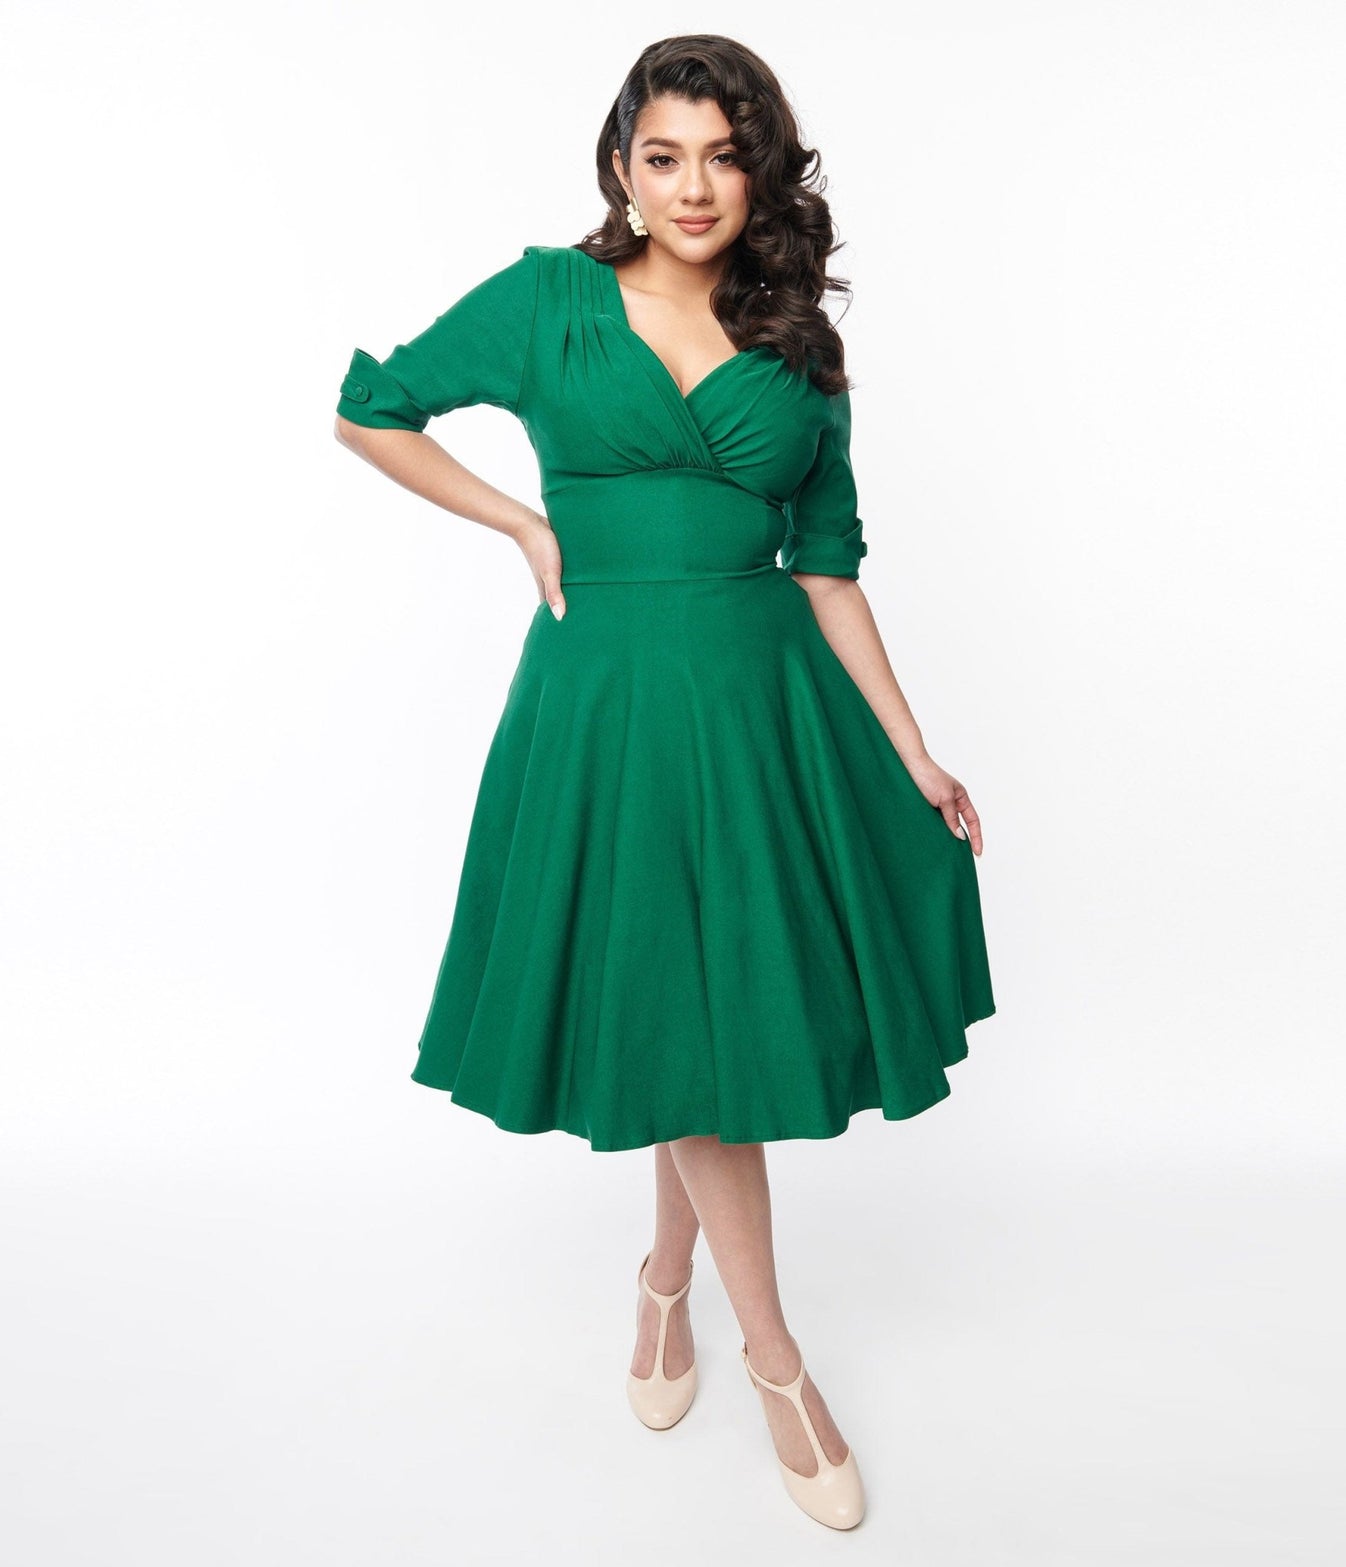 Unique Vintage Delores 1950s Emerald Green Swing Dress